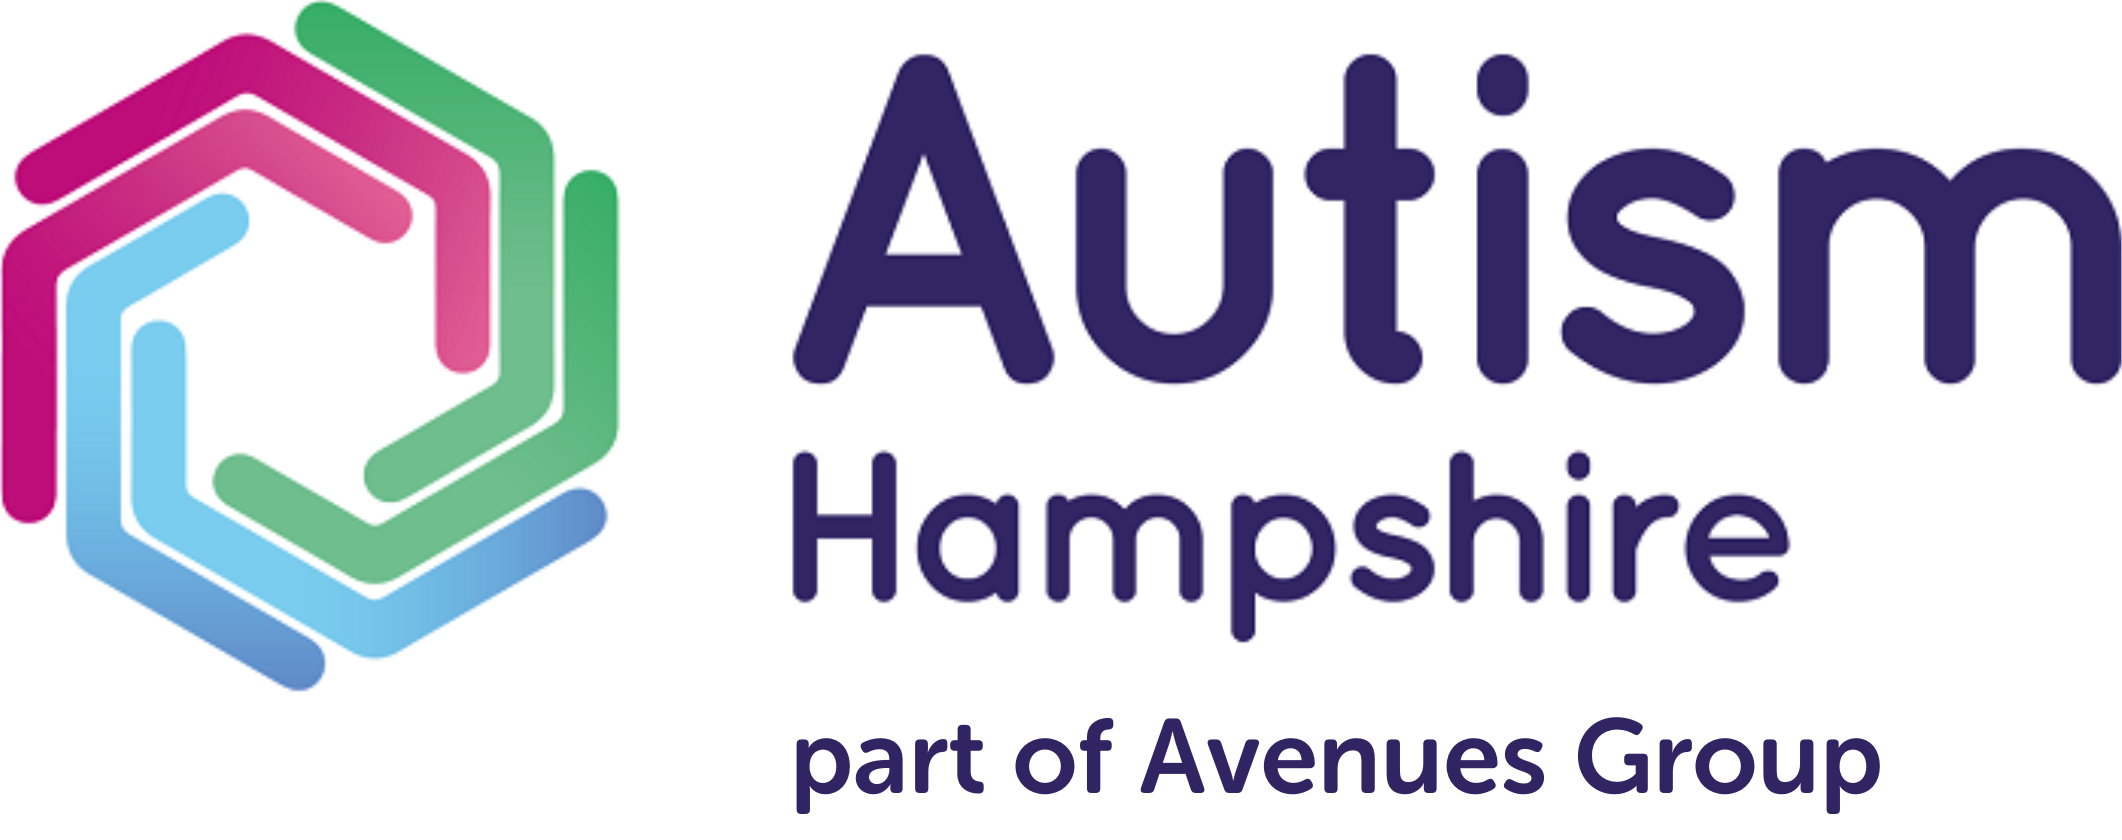 Austism Hampshire Logo